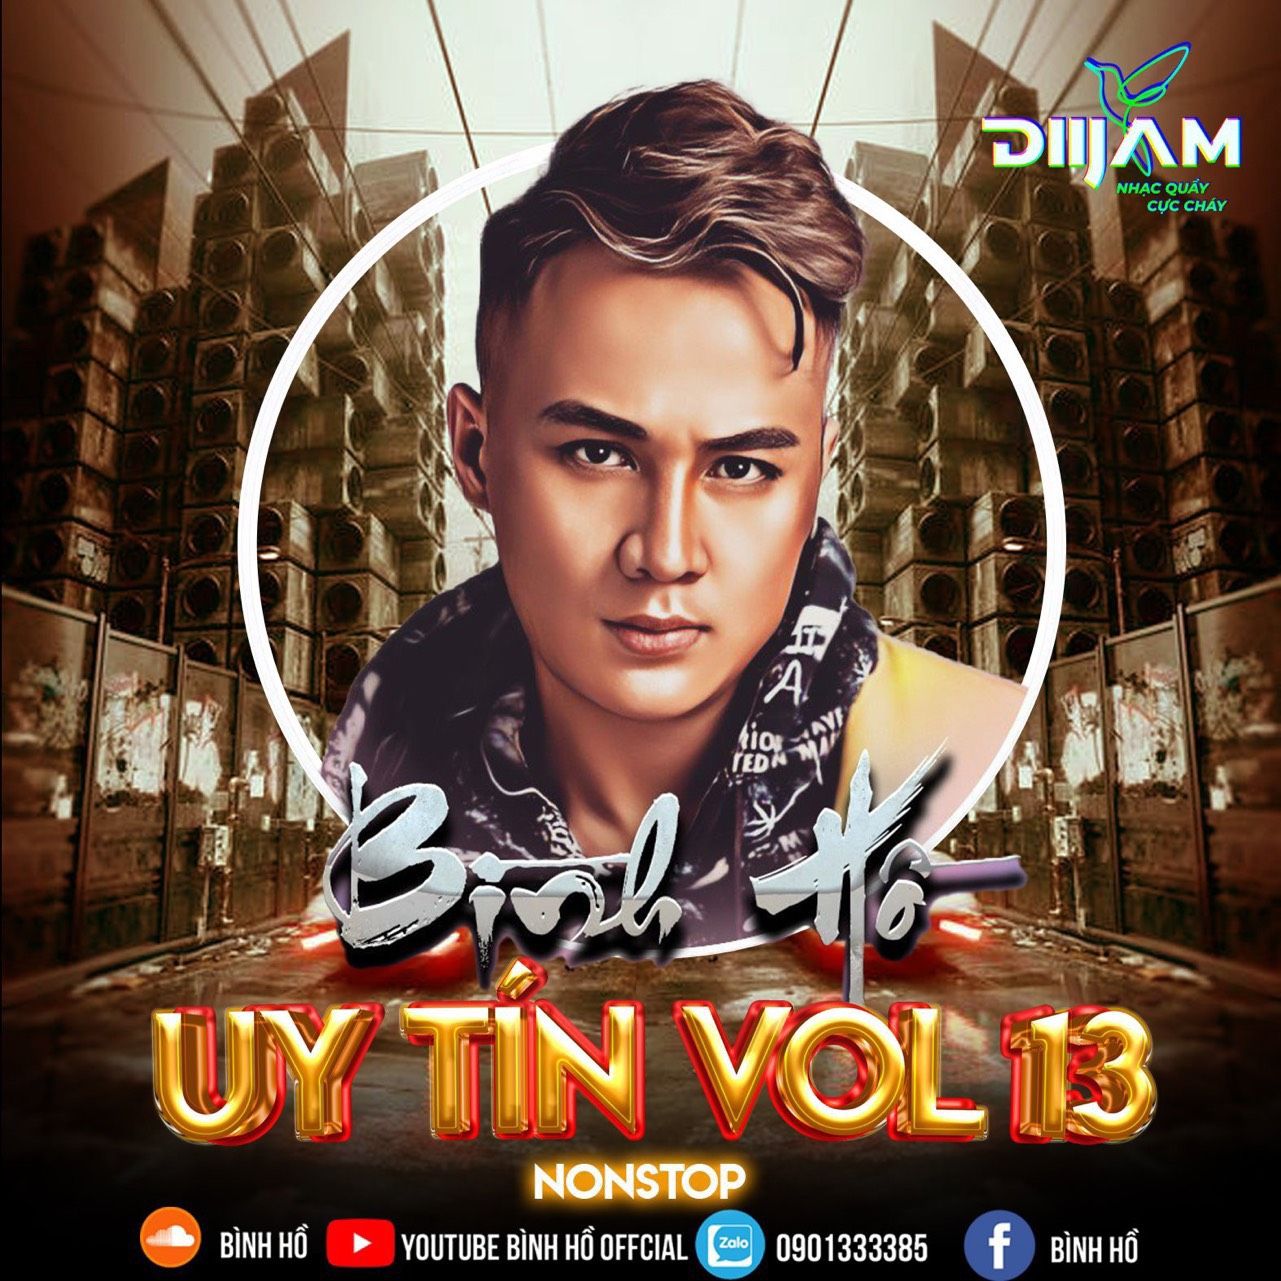 I-download Nonstop Uy Tín Vol.13 ( Bình Hồ Mix)